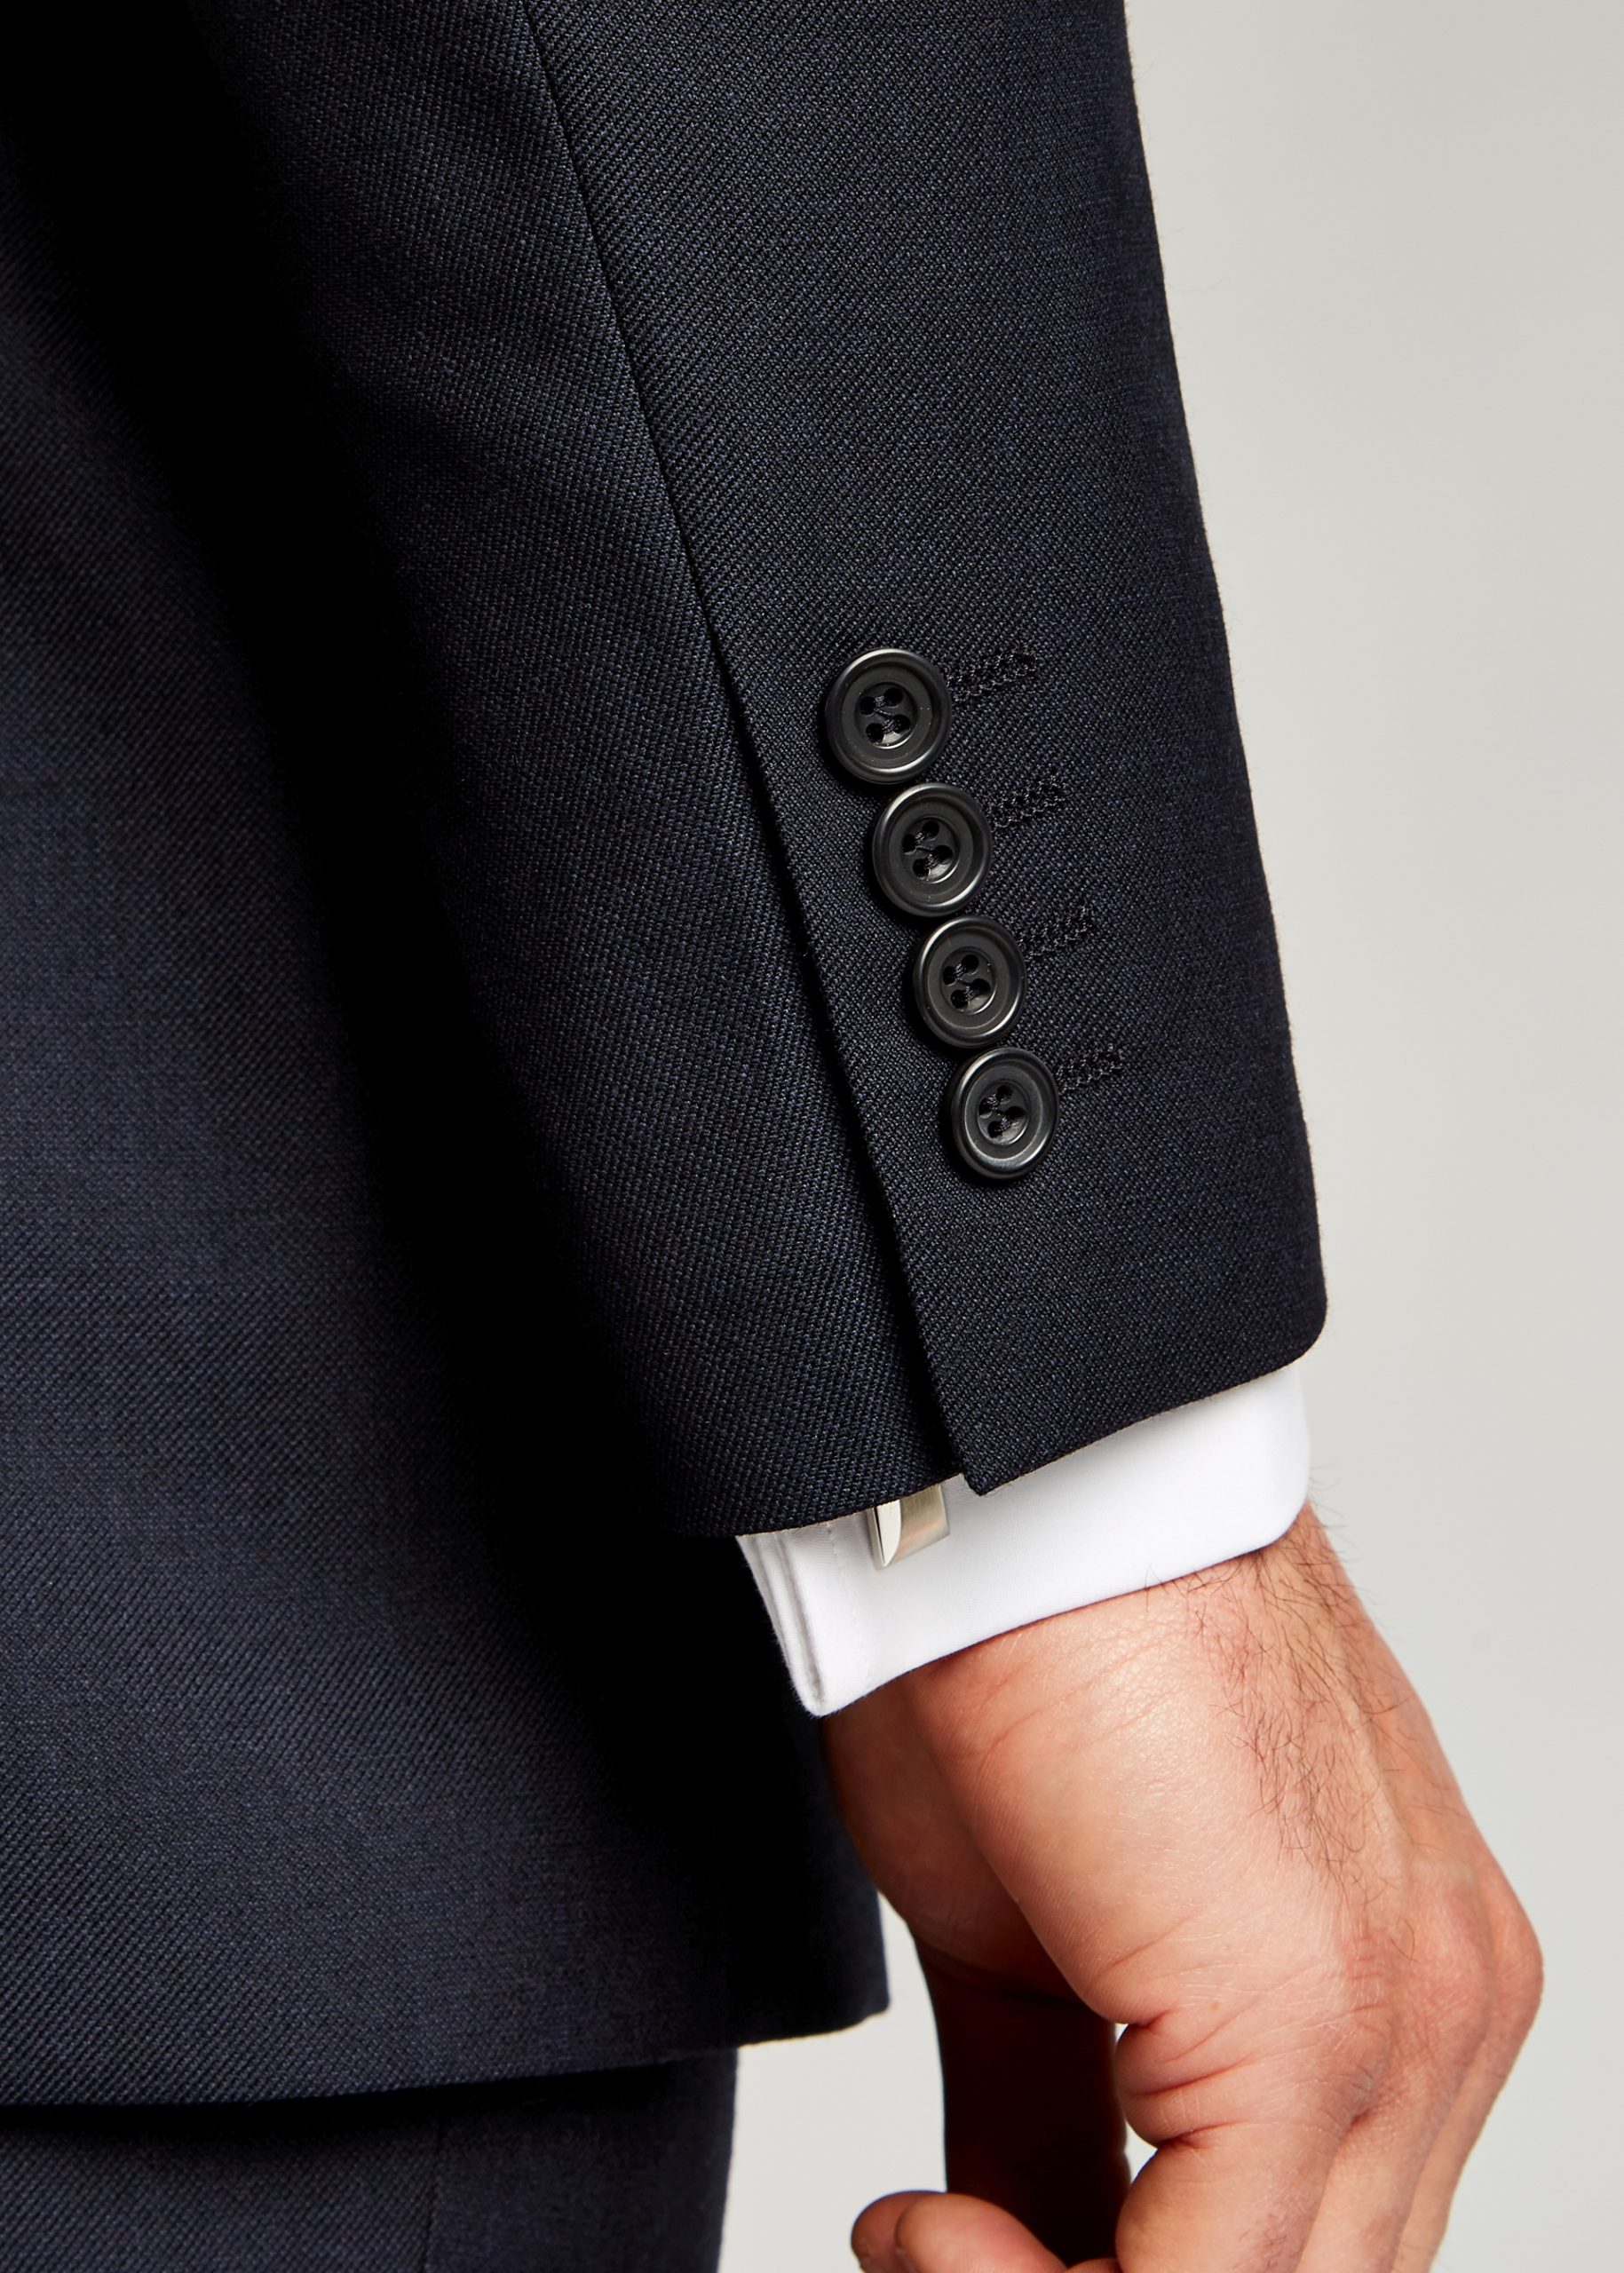 Men’s 4 button cuff suit detail navy suit from London